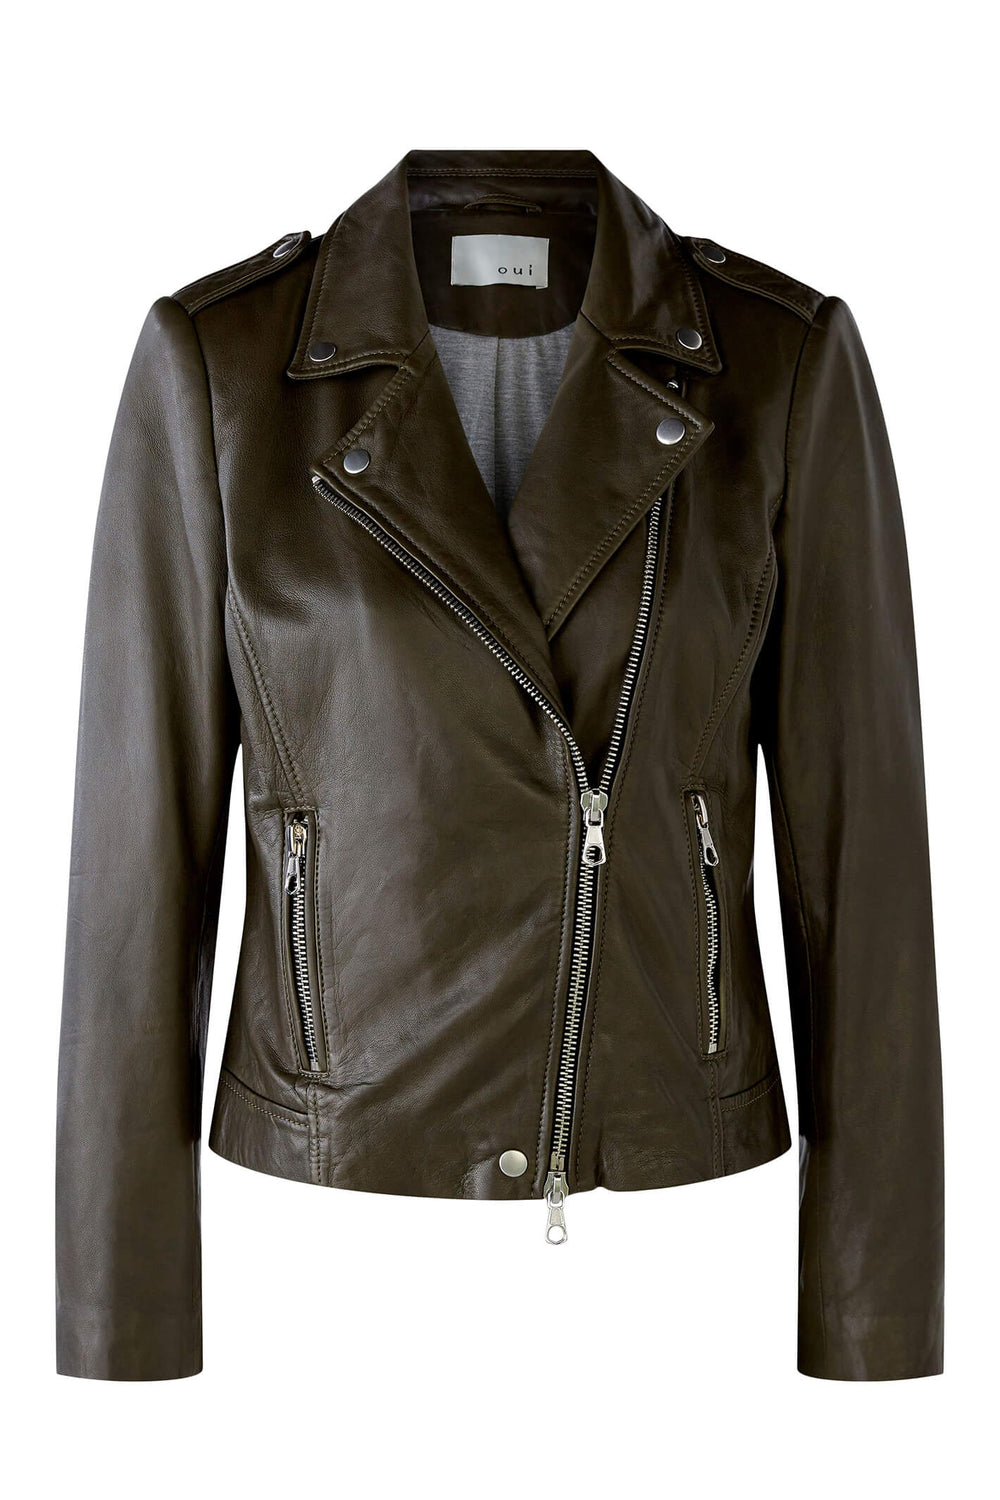 Oui 76138 Dark Khaki Biker Style Jacket - Olivia Grace Fashion